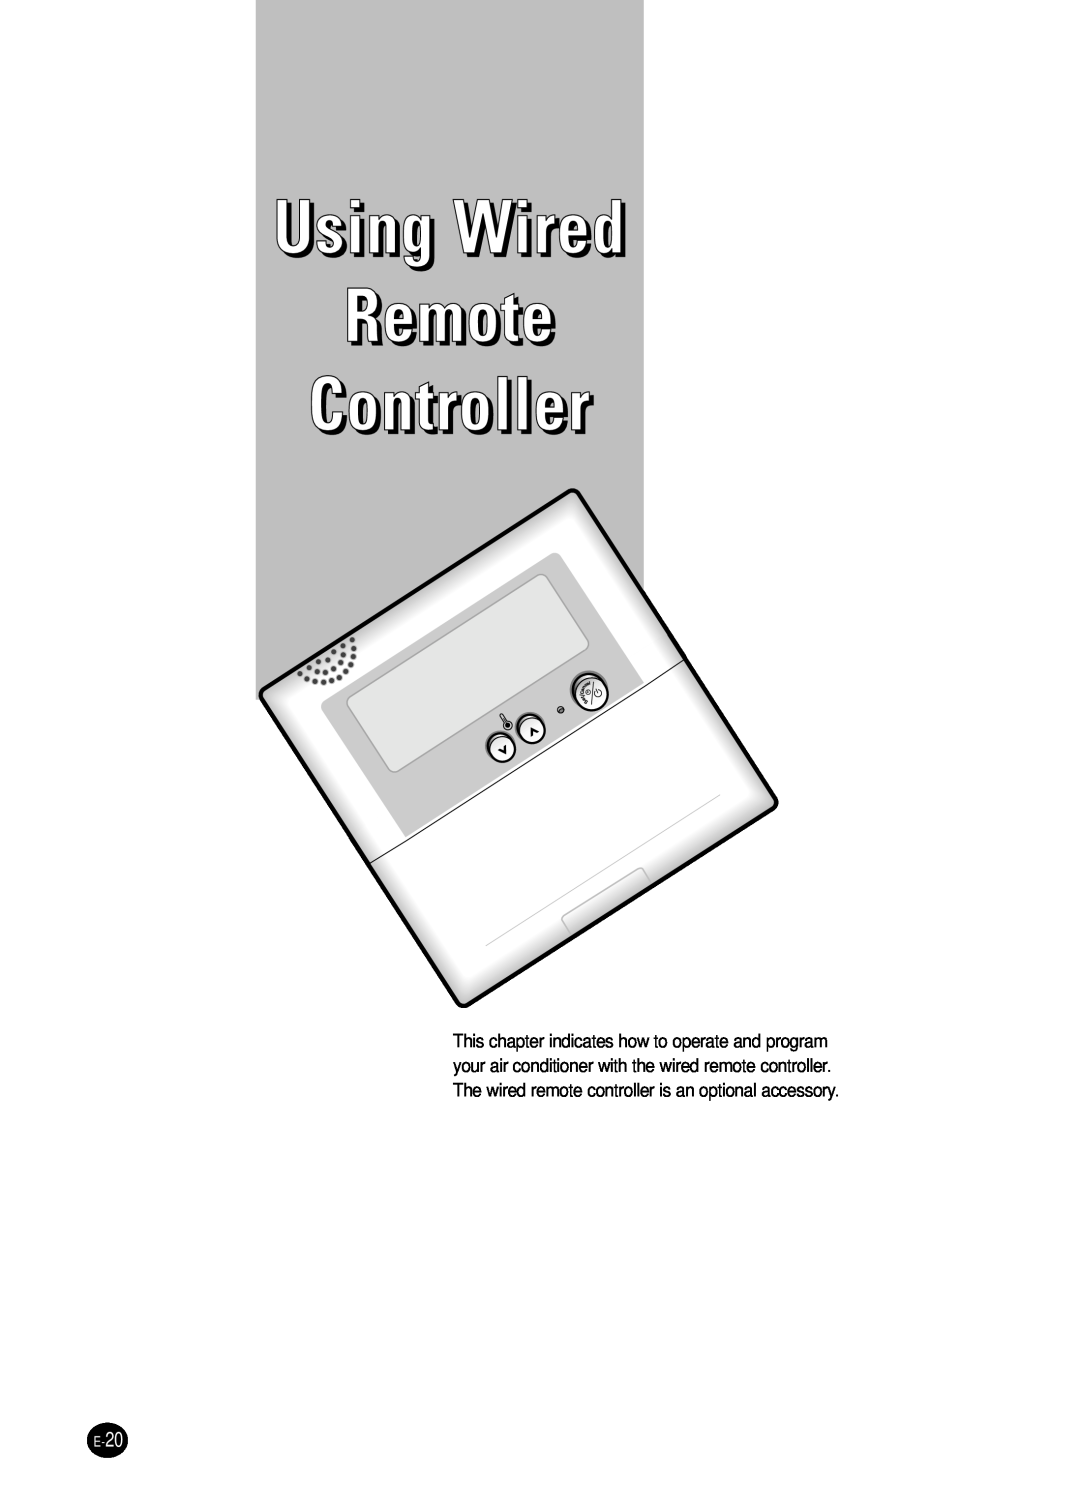 Samsung AFPCC052CA0 manuel dutilisation Using Wired Remote Controller, E-20 